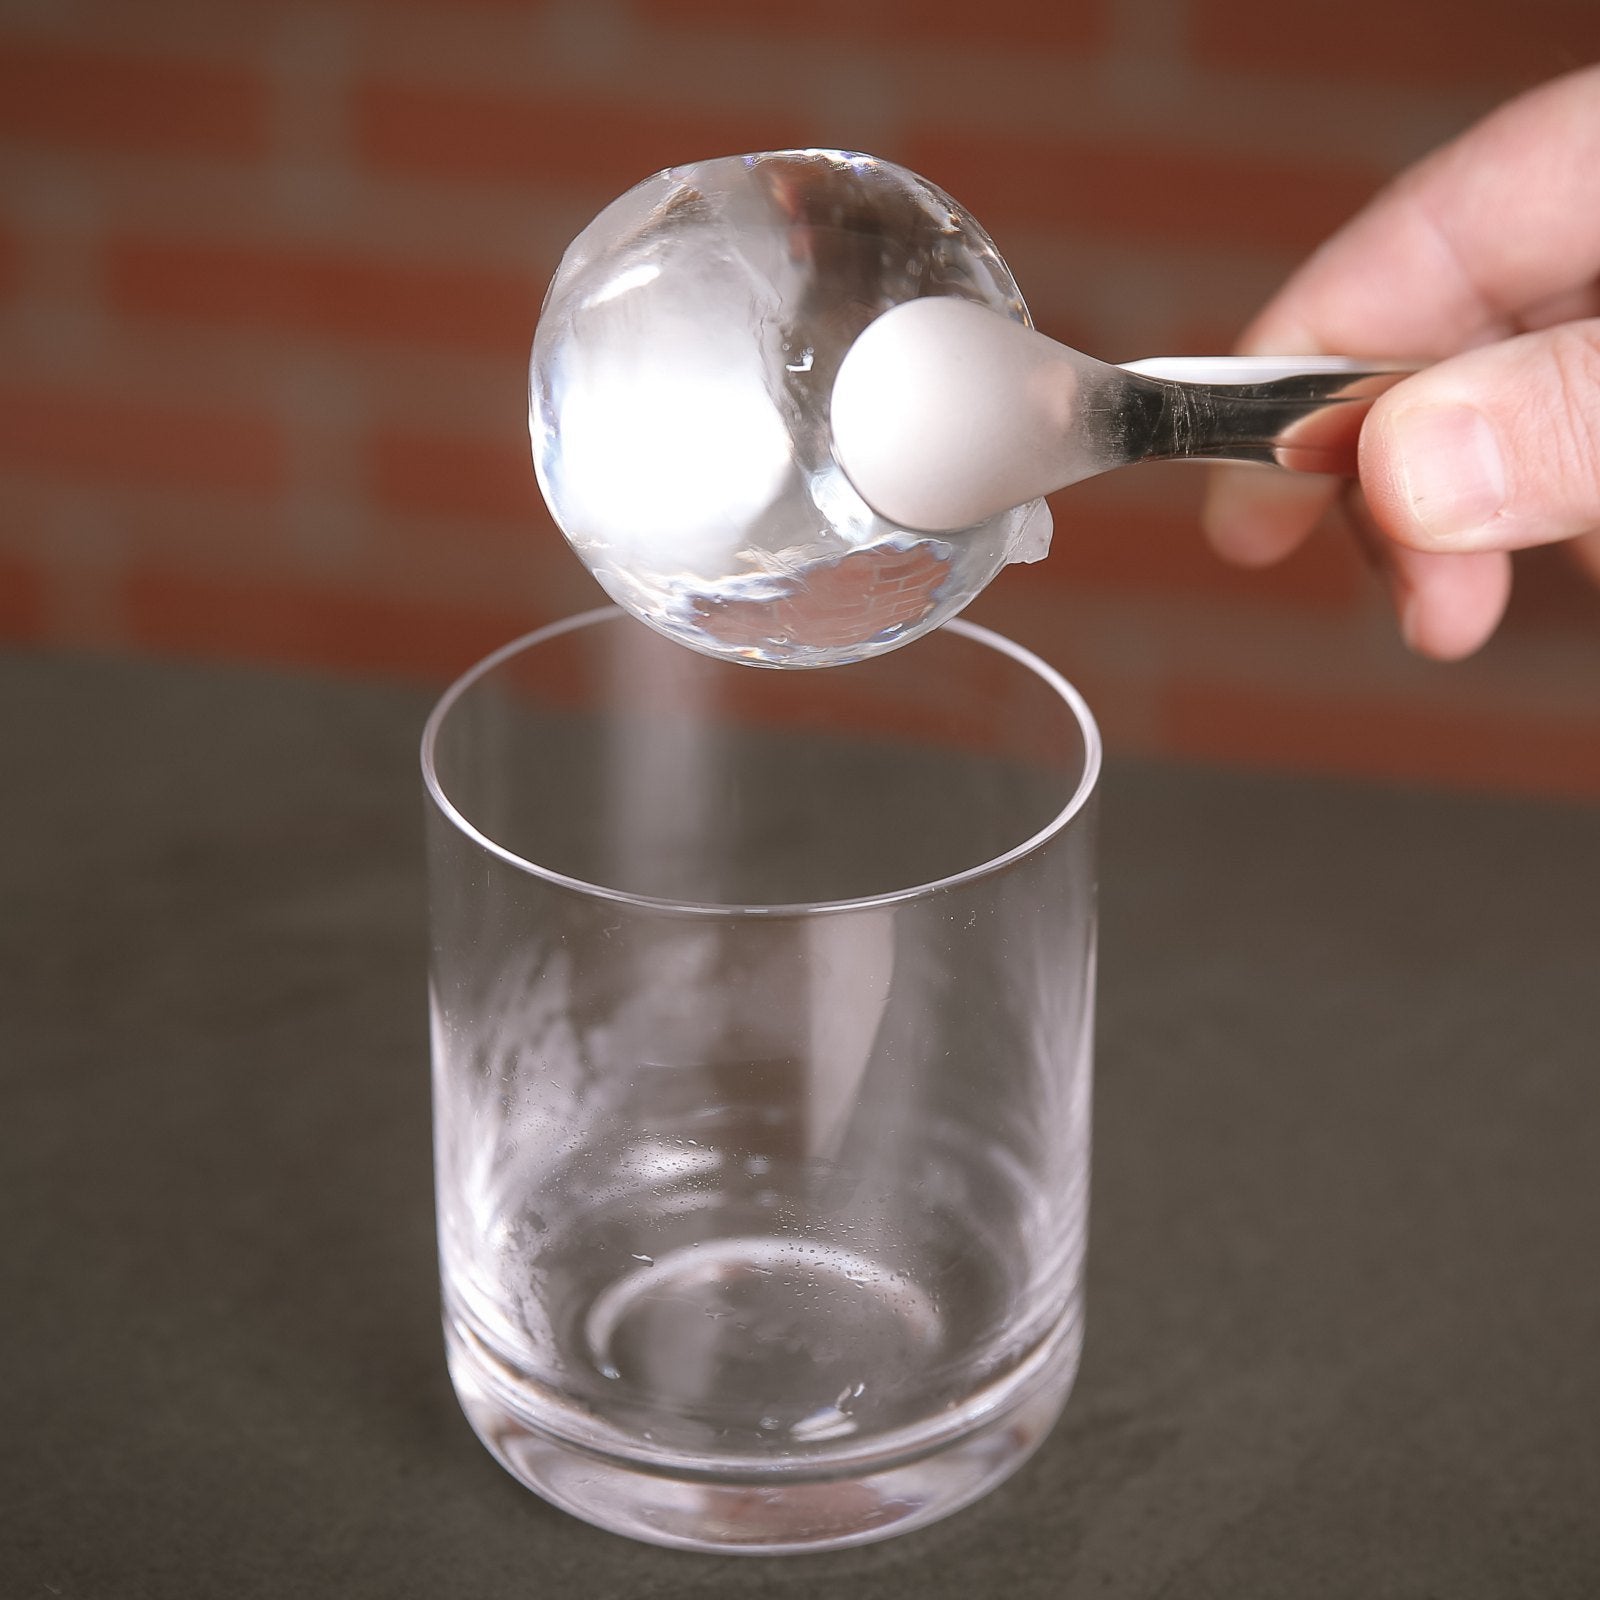 QB Kraftz Clear Ice Ball Maker - Slow Melting Clear Sphere Ice